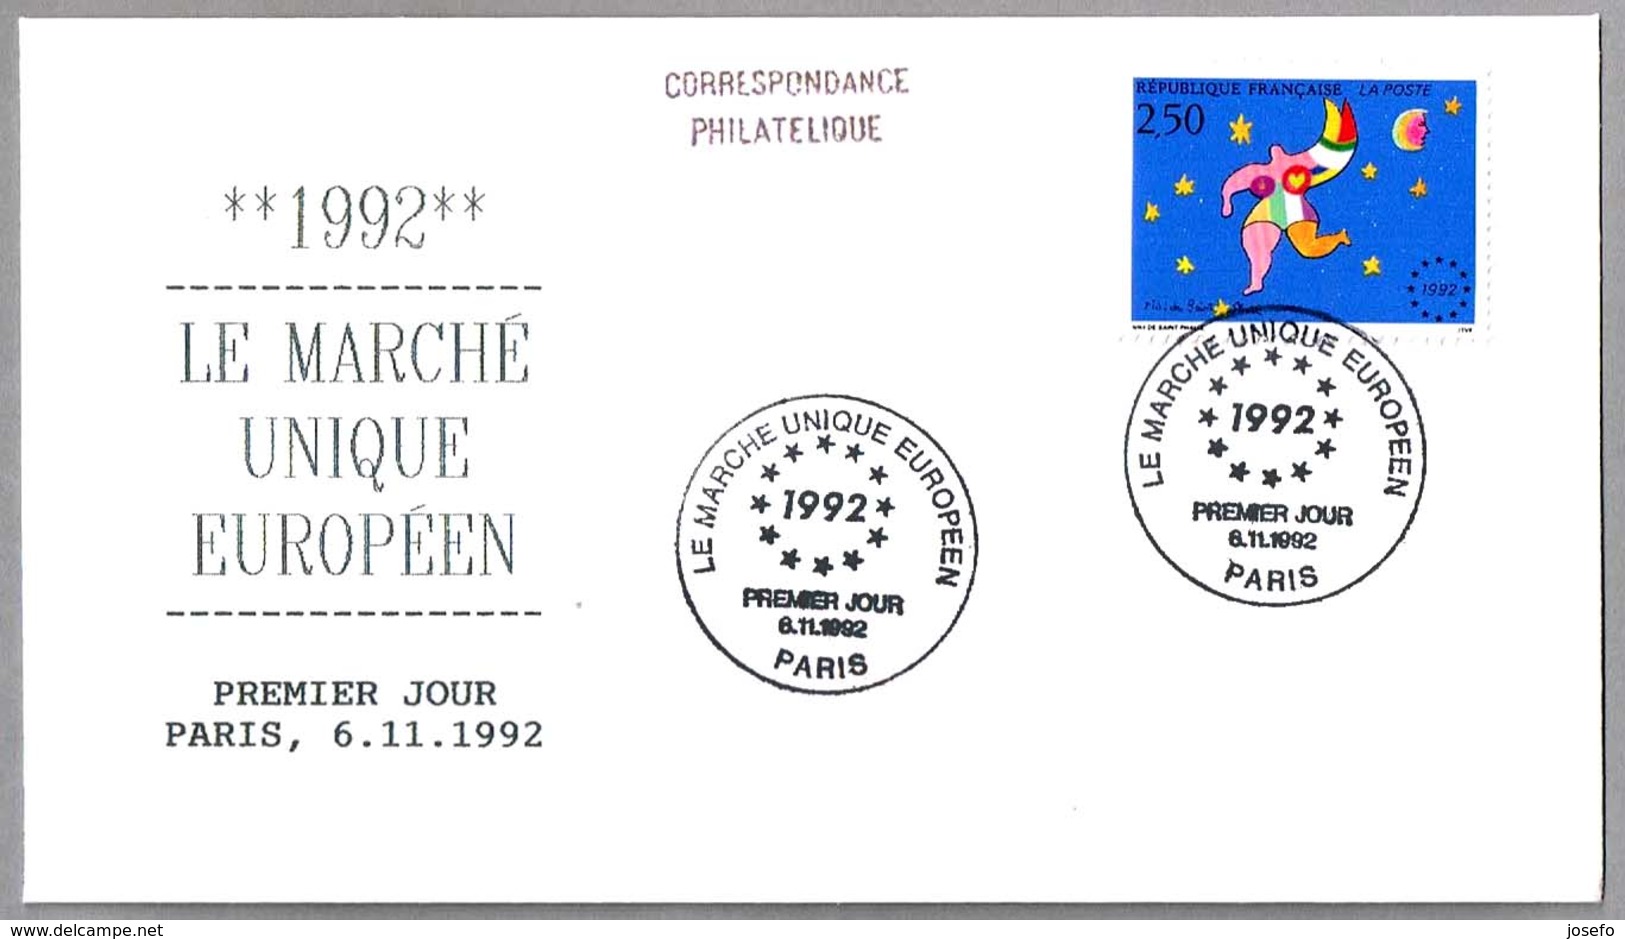 MERCADO COMUN EUROPEO - SINGLE EUROPEAN MARKET. SPD/FDC Paris 1992 - Instituciones Europeas